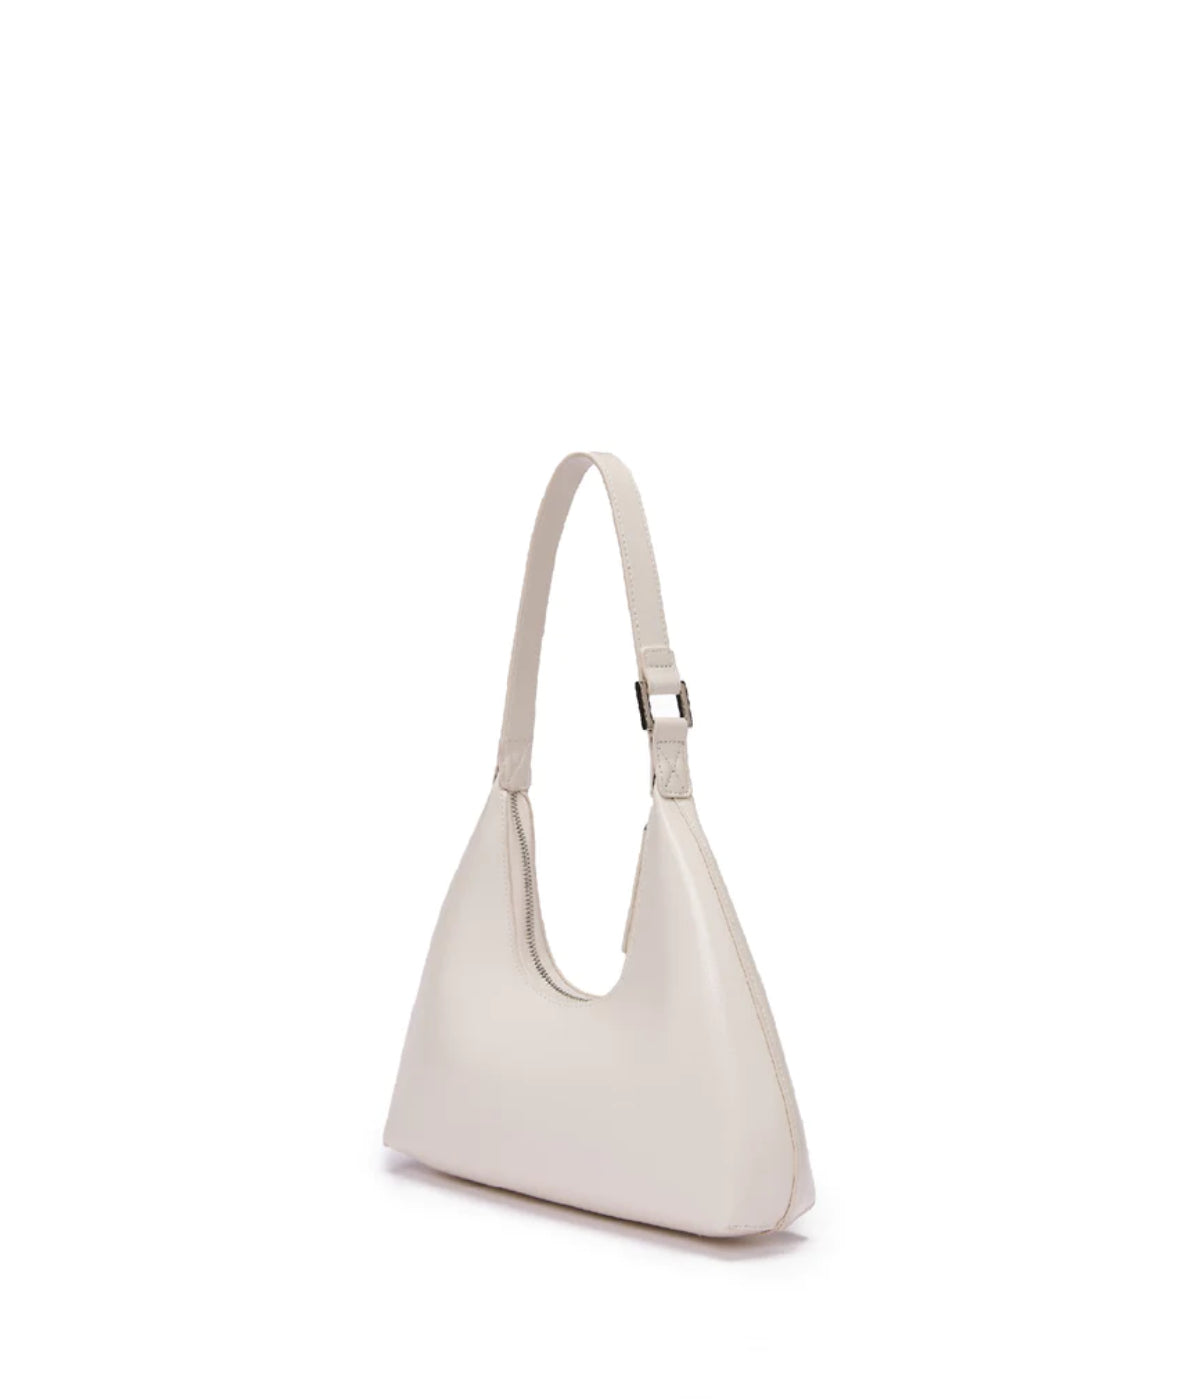 Alexia Bag in Smooth Leather White